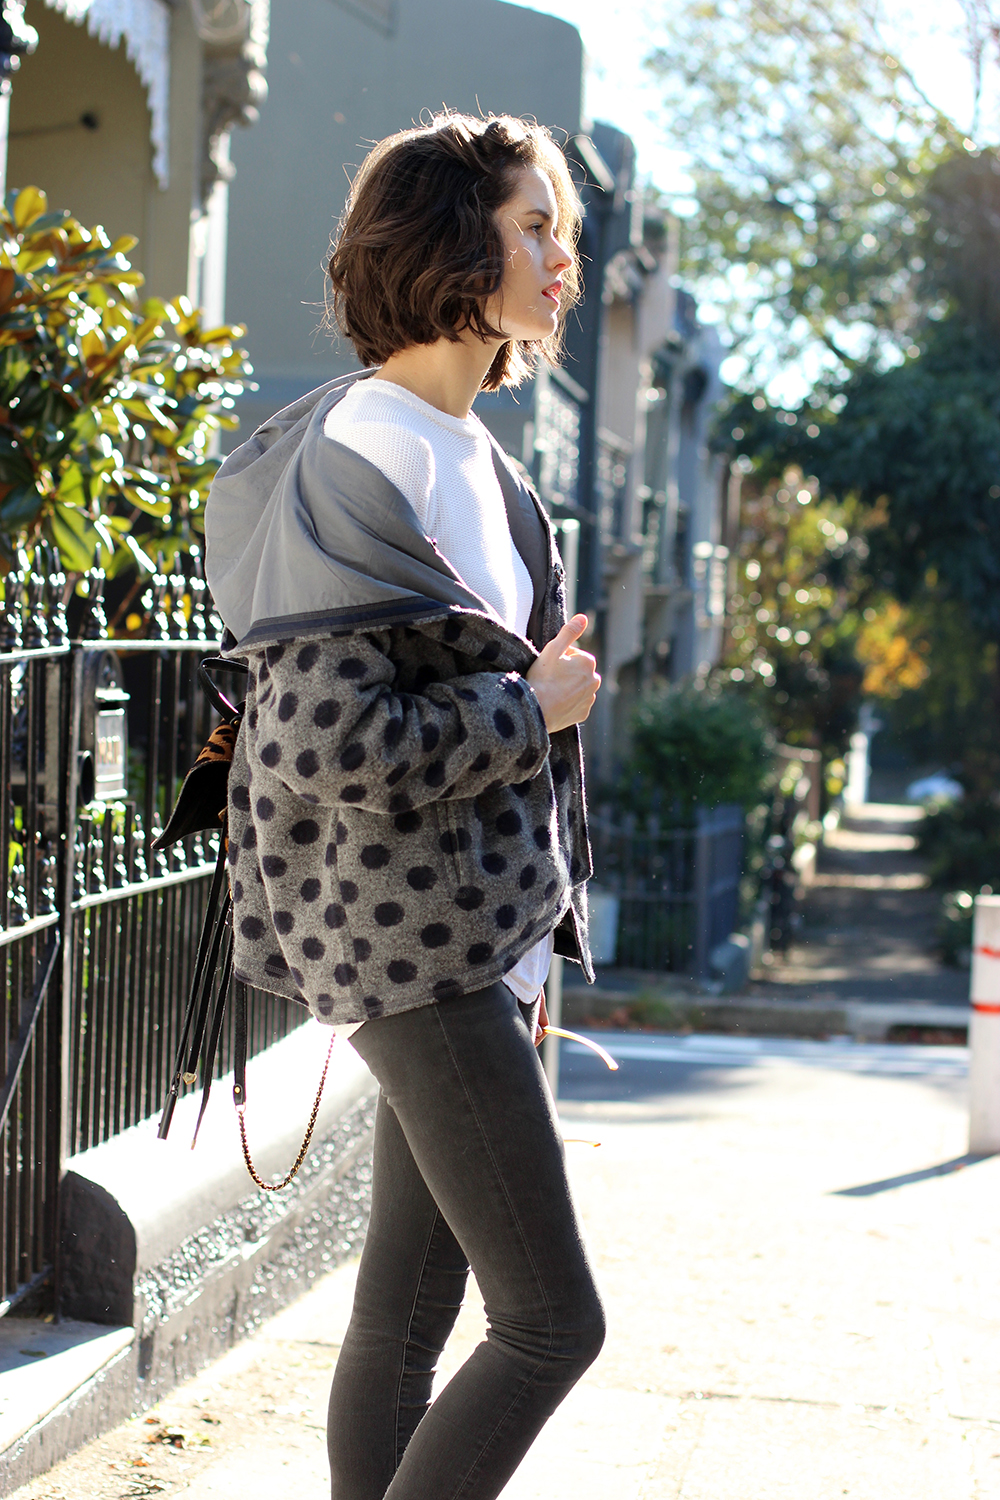 Chloe C Hill Australian fashion blog | Lee mathews Polka Dot Boiled Wool Jacket on the streets of paddington